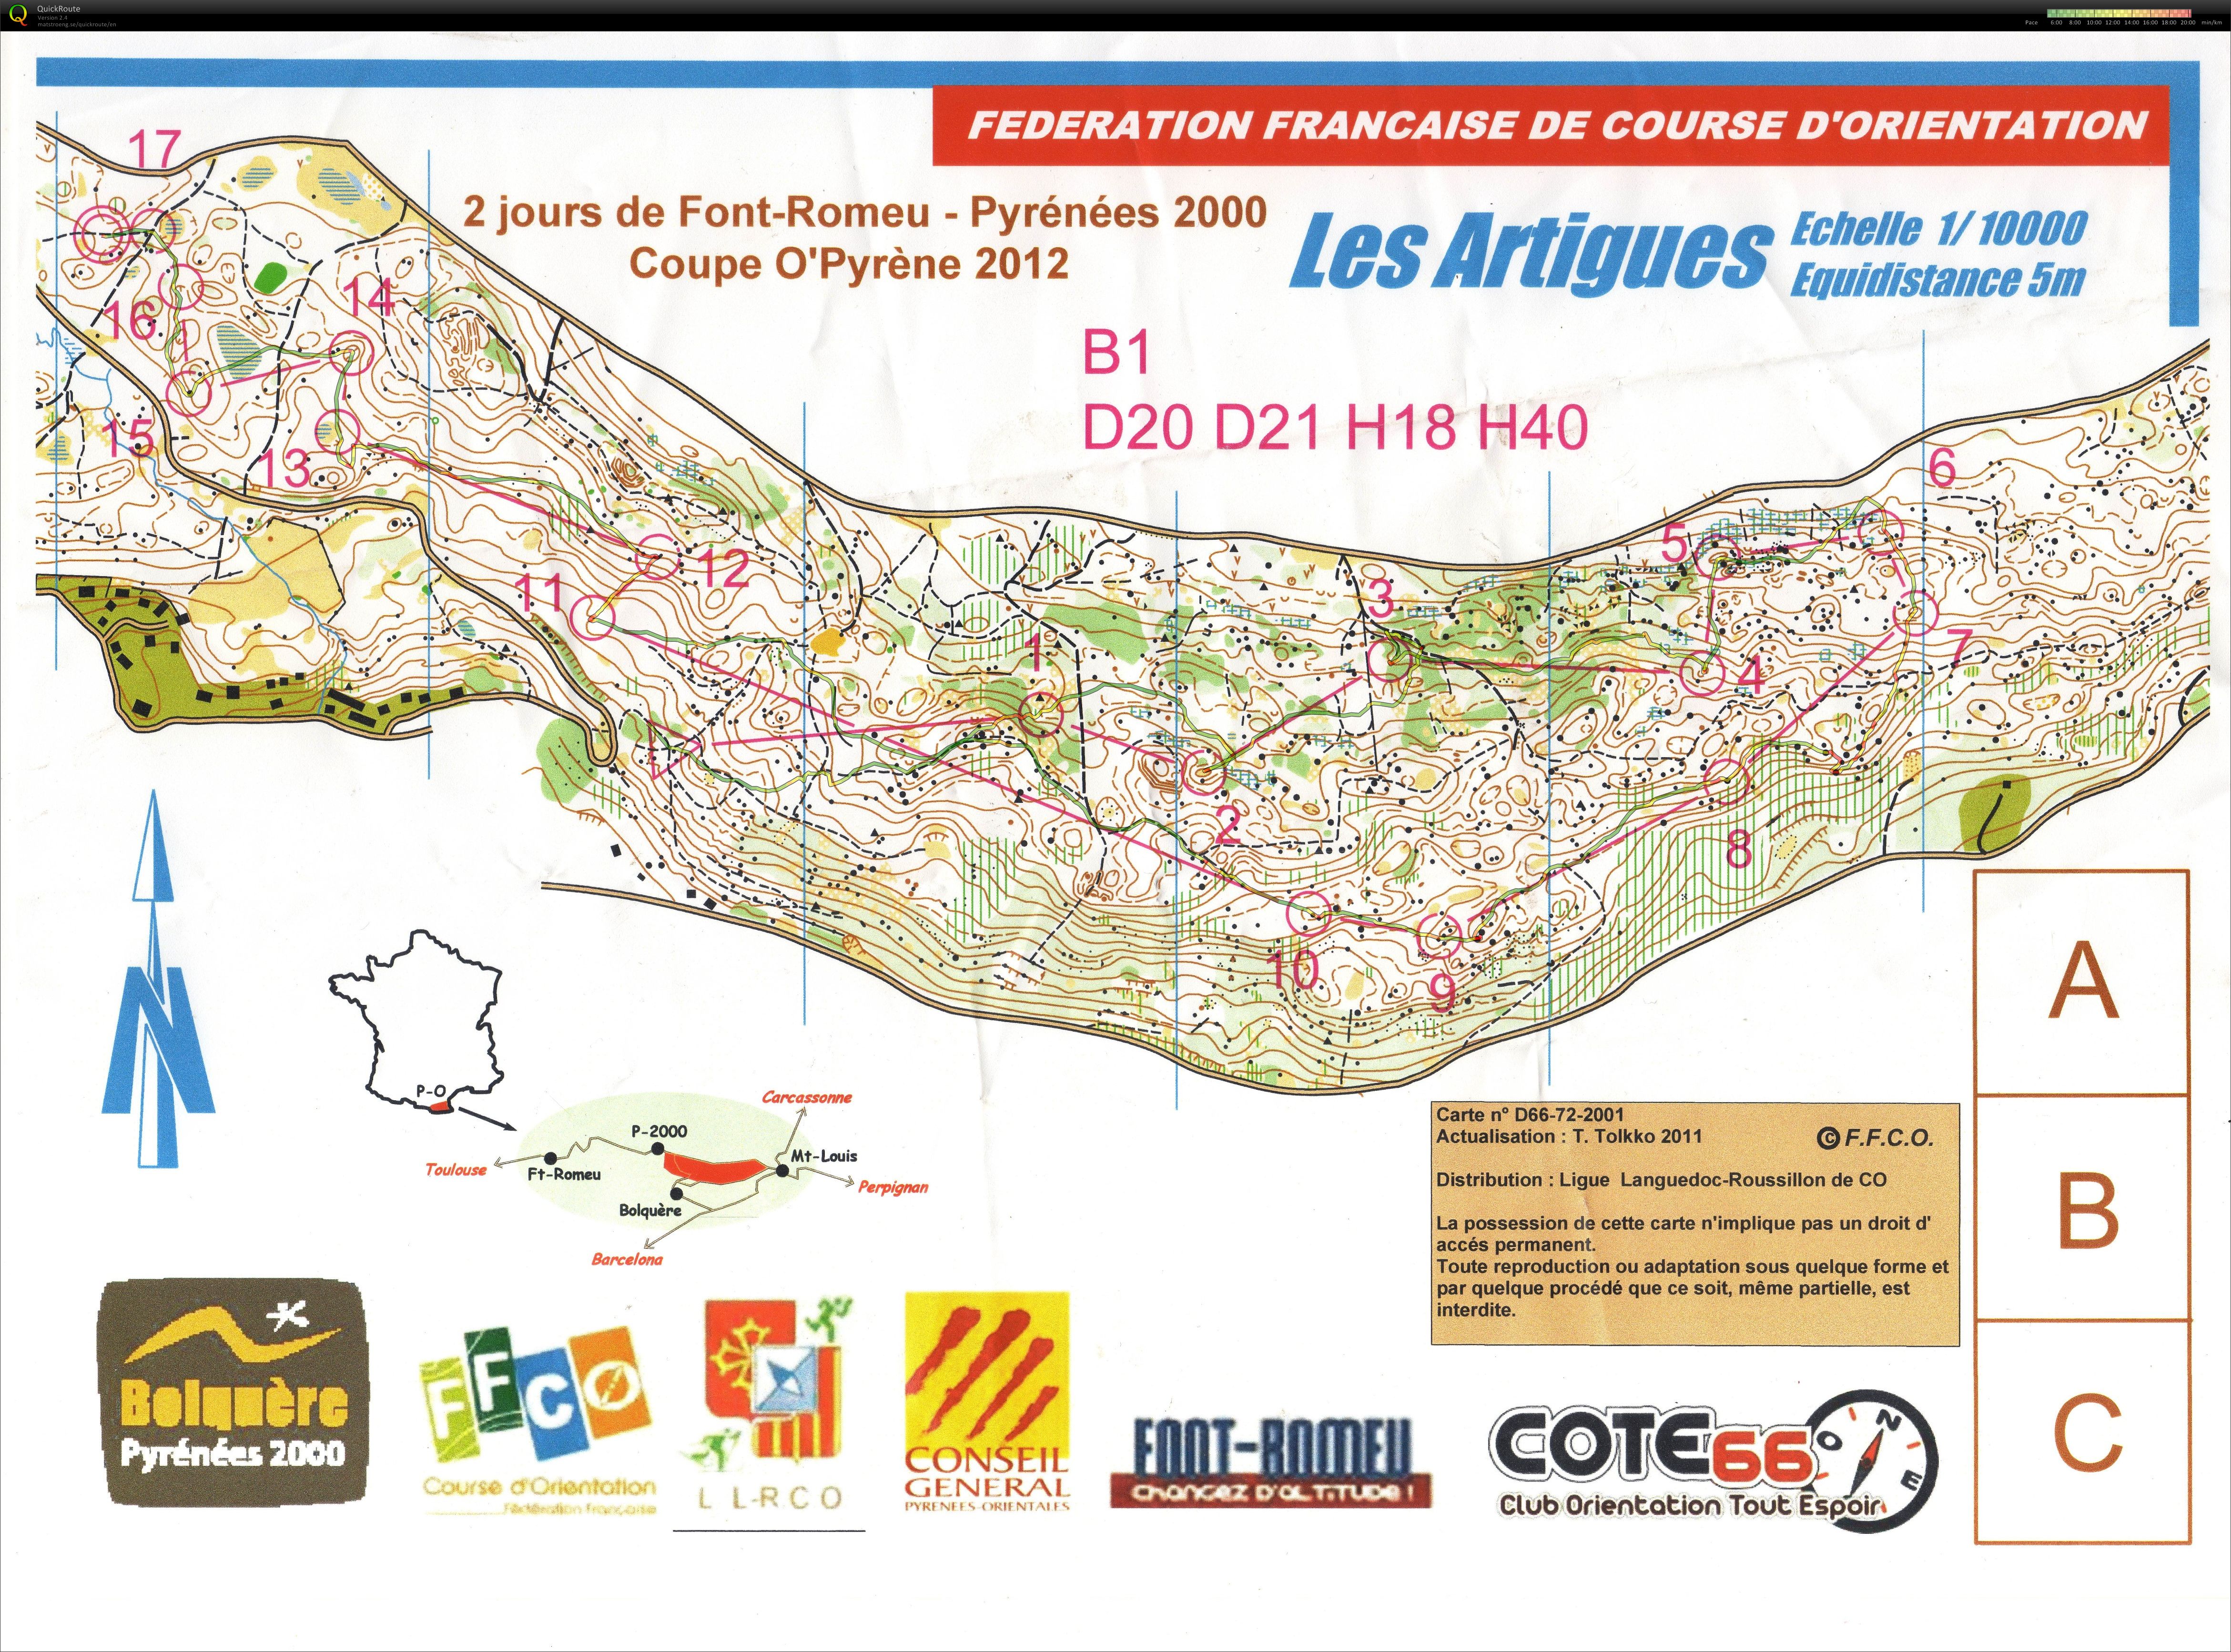 O'Pyrene 2 jours de Font Romeu - Pyrénées 2000 (2012-09-02)